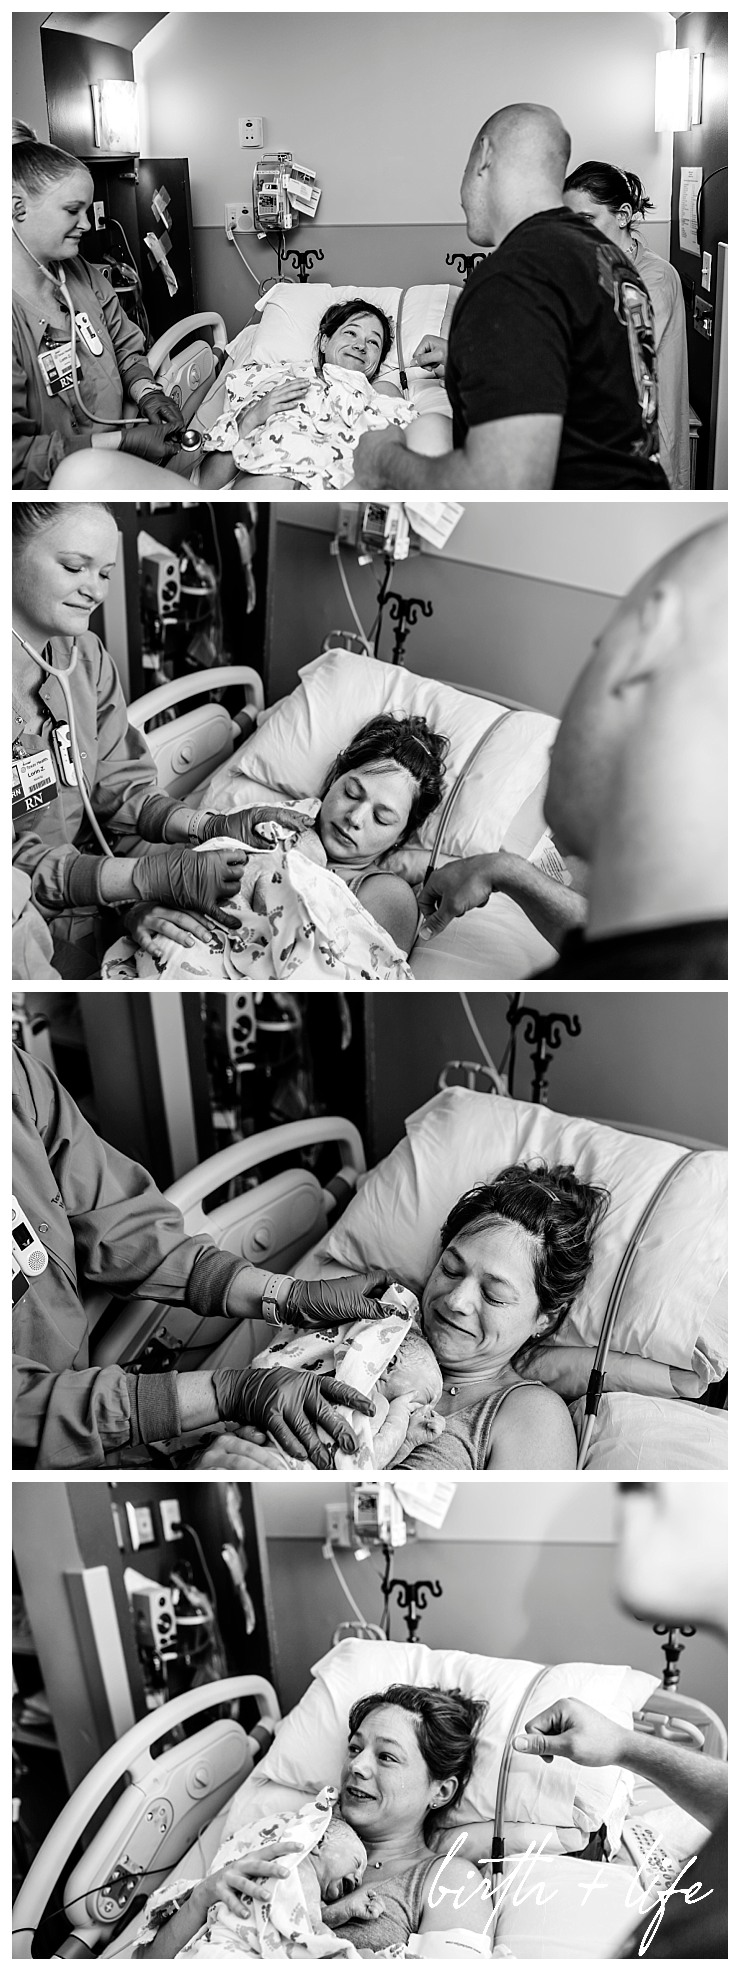 dfw-birth-and-life-photography-family-photojournalism-documentary-birth-storyacclaim-midwives-clark032.jpg